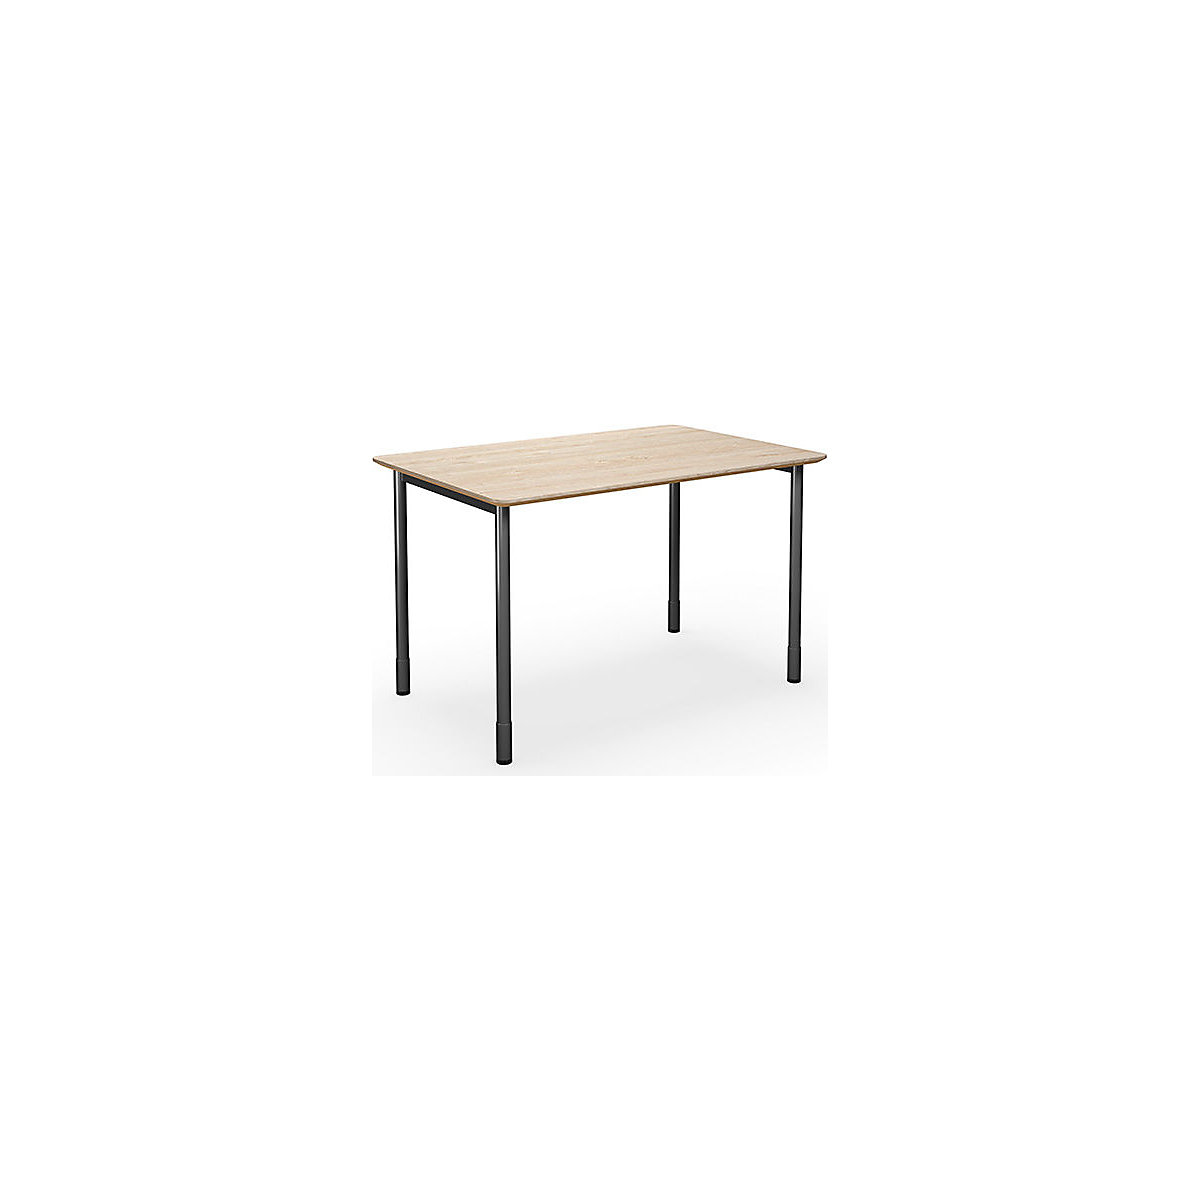 DUO-C Trend multi-purpose desk, straight tabletop, rounded corners, WxD 1200 x 800 mm, oak, black-5